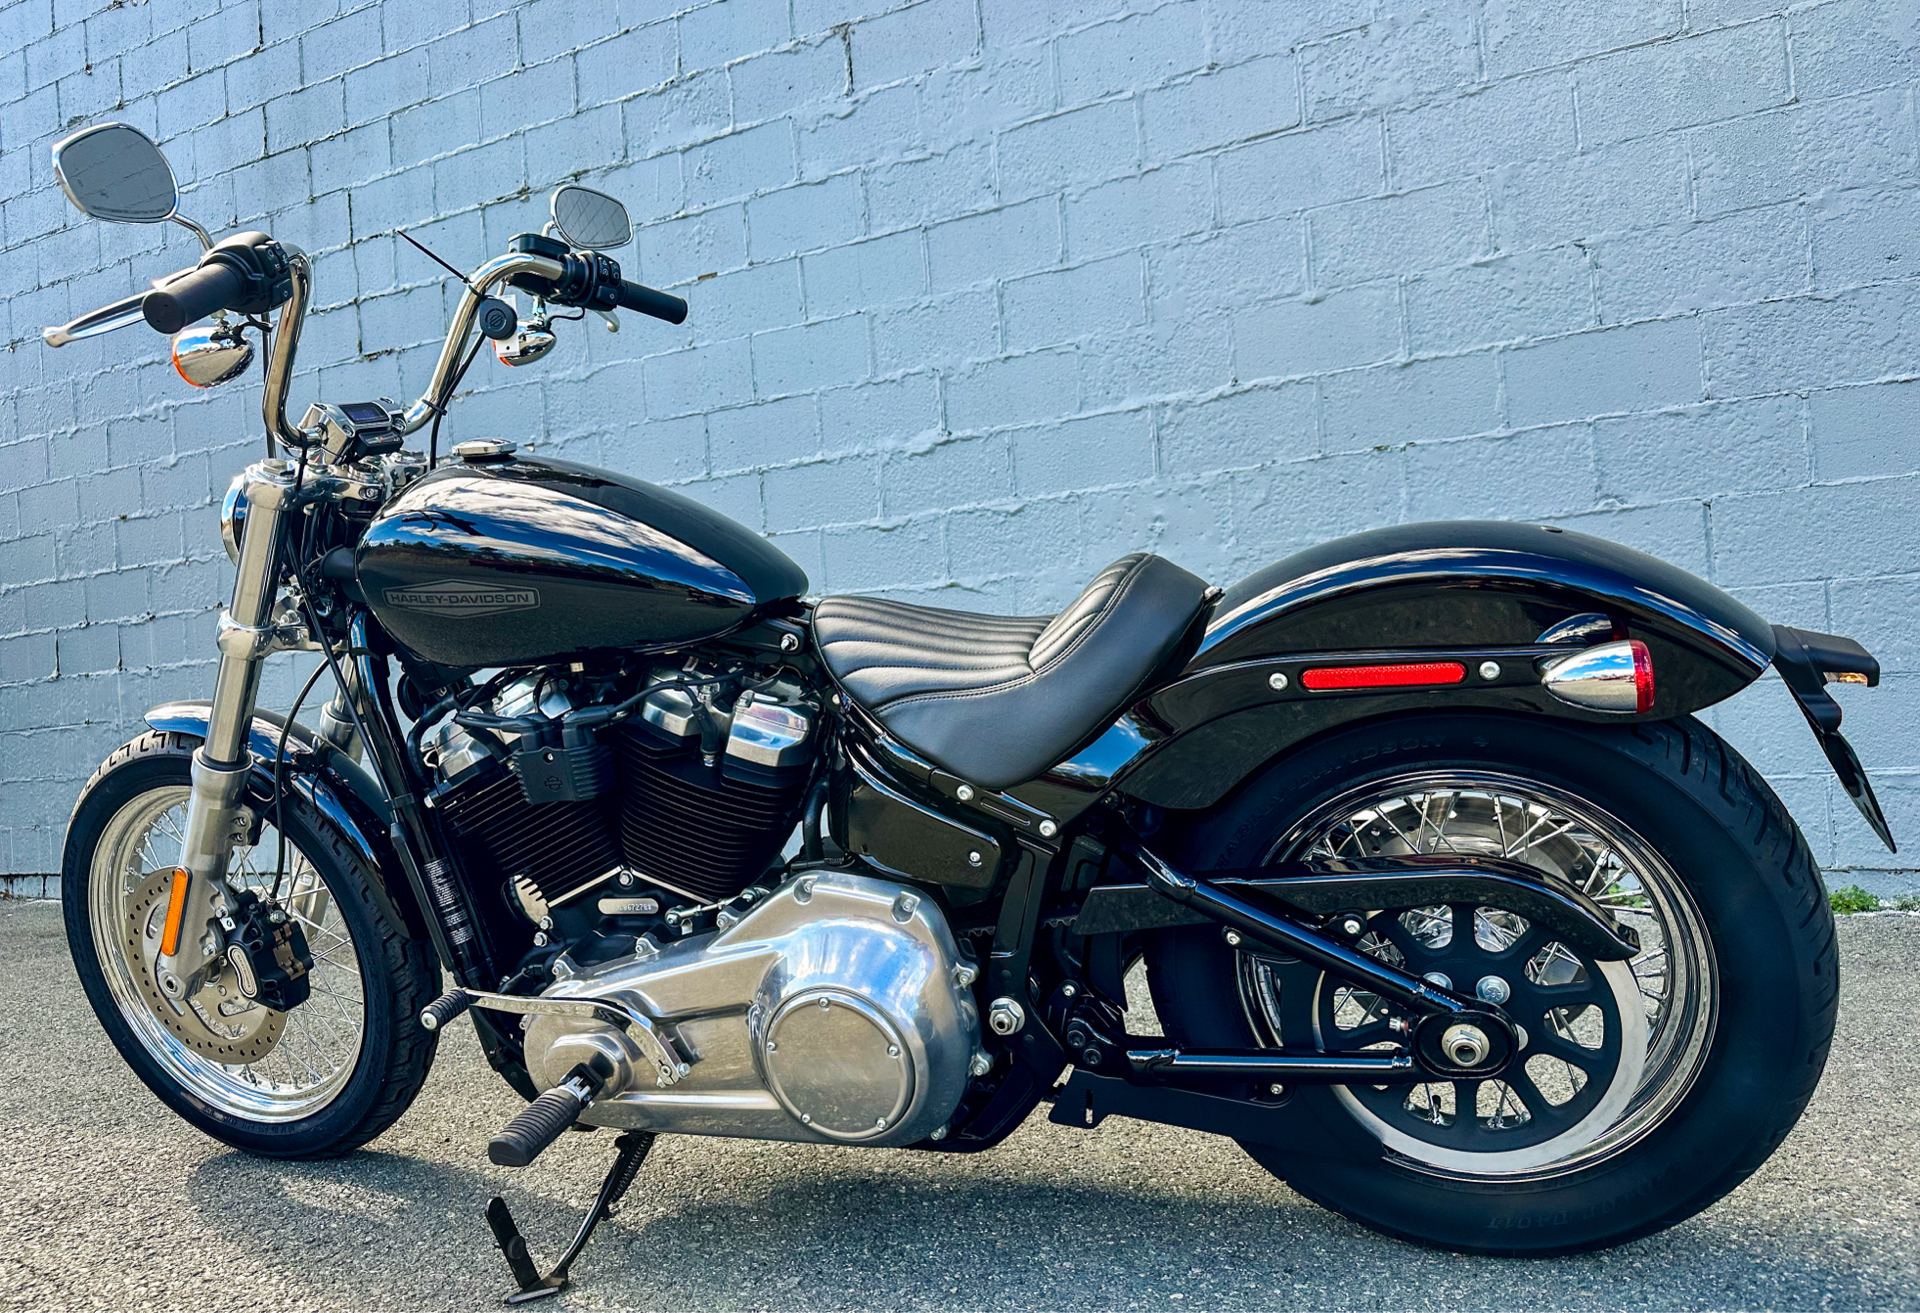 2020 Harley-Davidson Softail® Standard in Foxboro, Massachusetts - Photo 9